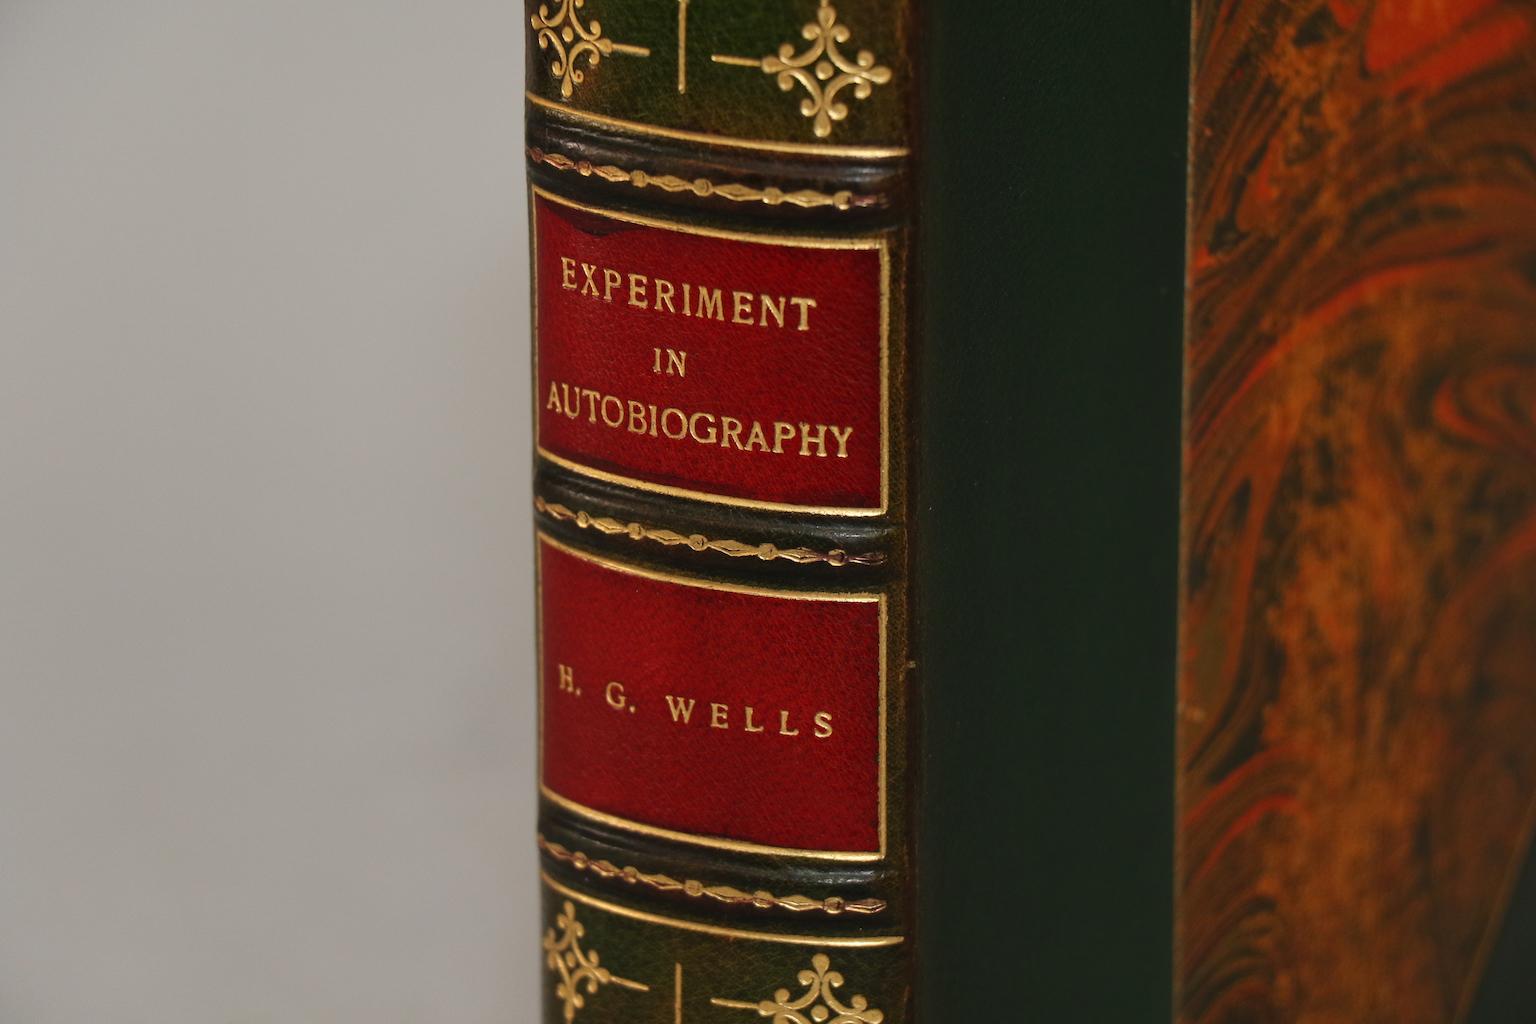 Full title: H.G. Wells' 